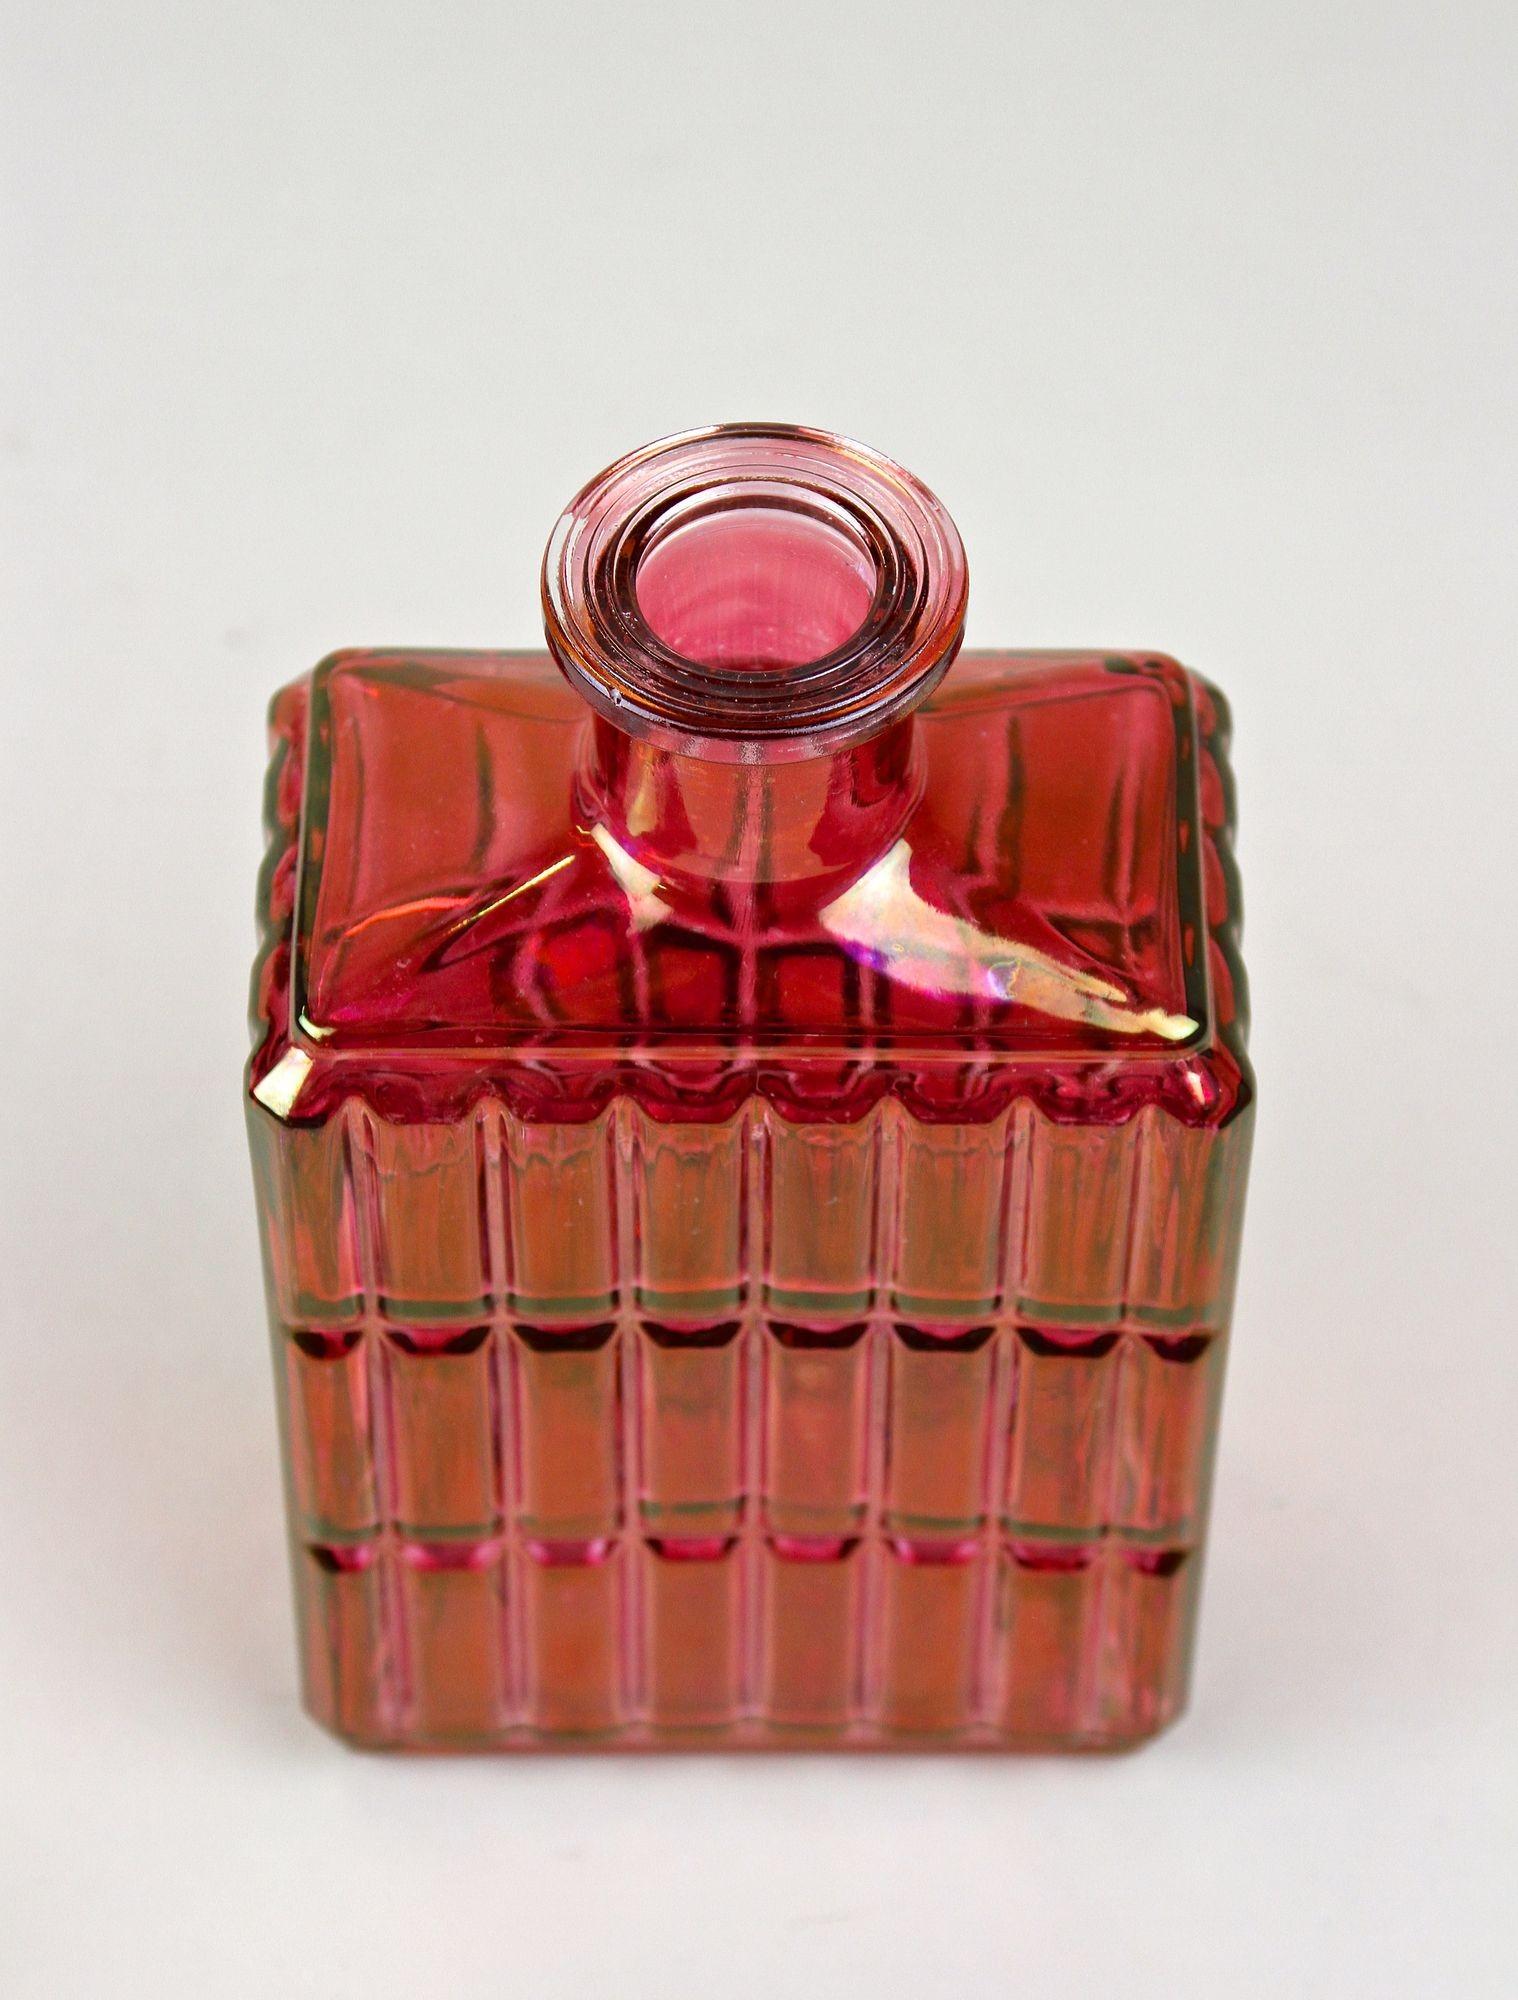 20th Century Art Deco Glass Decanter or Liquor Bottle, Austria ca. 1930 For Sale 5